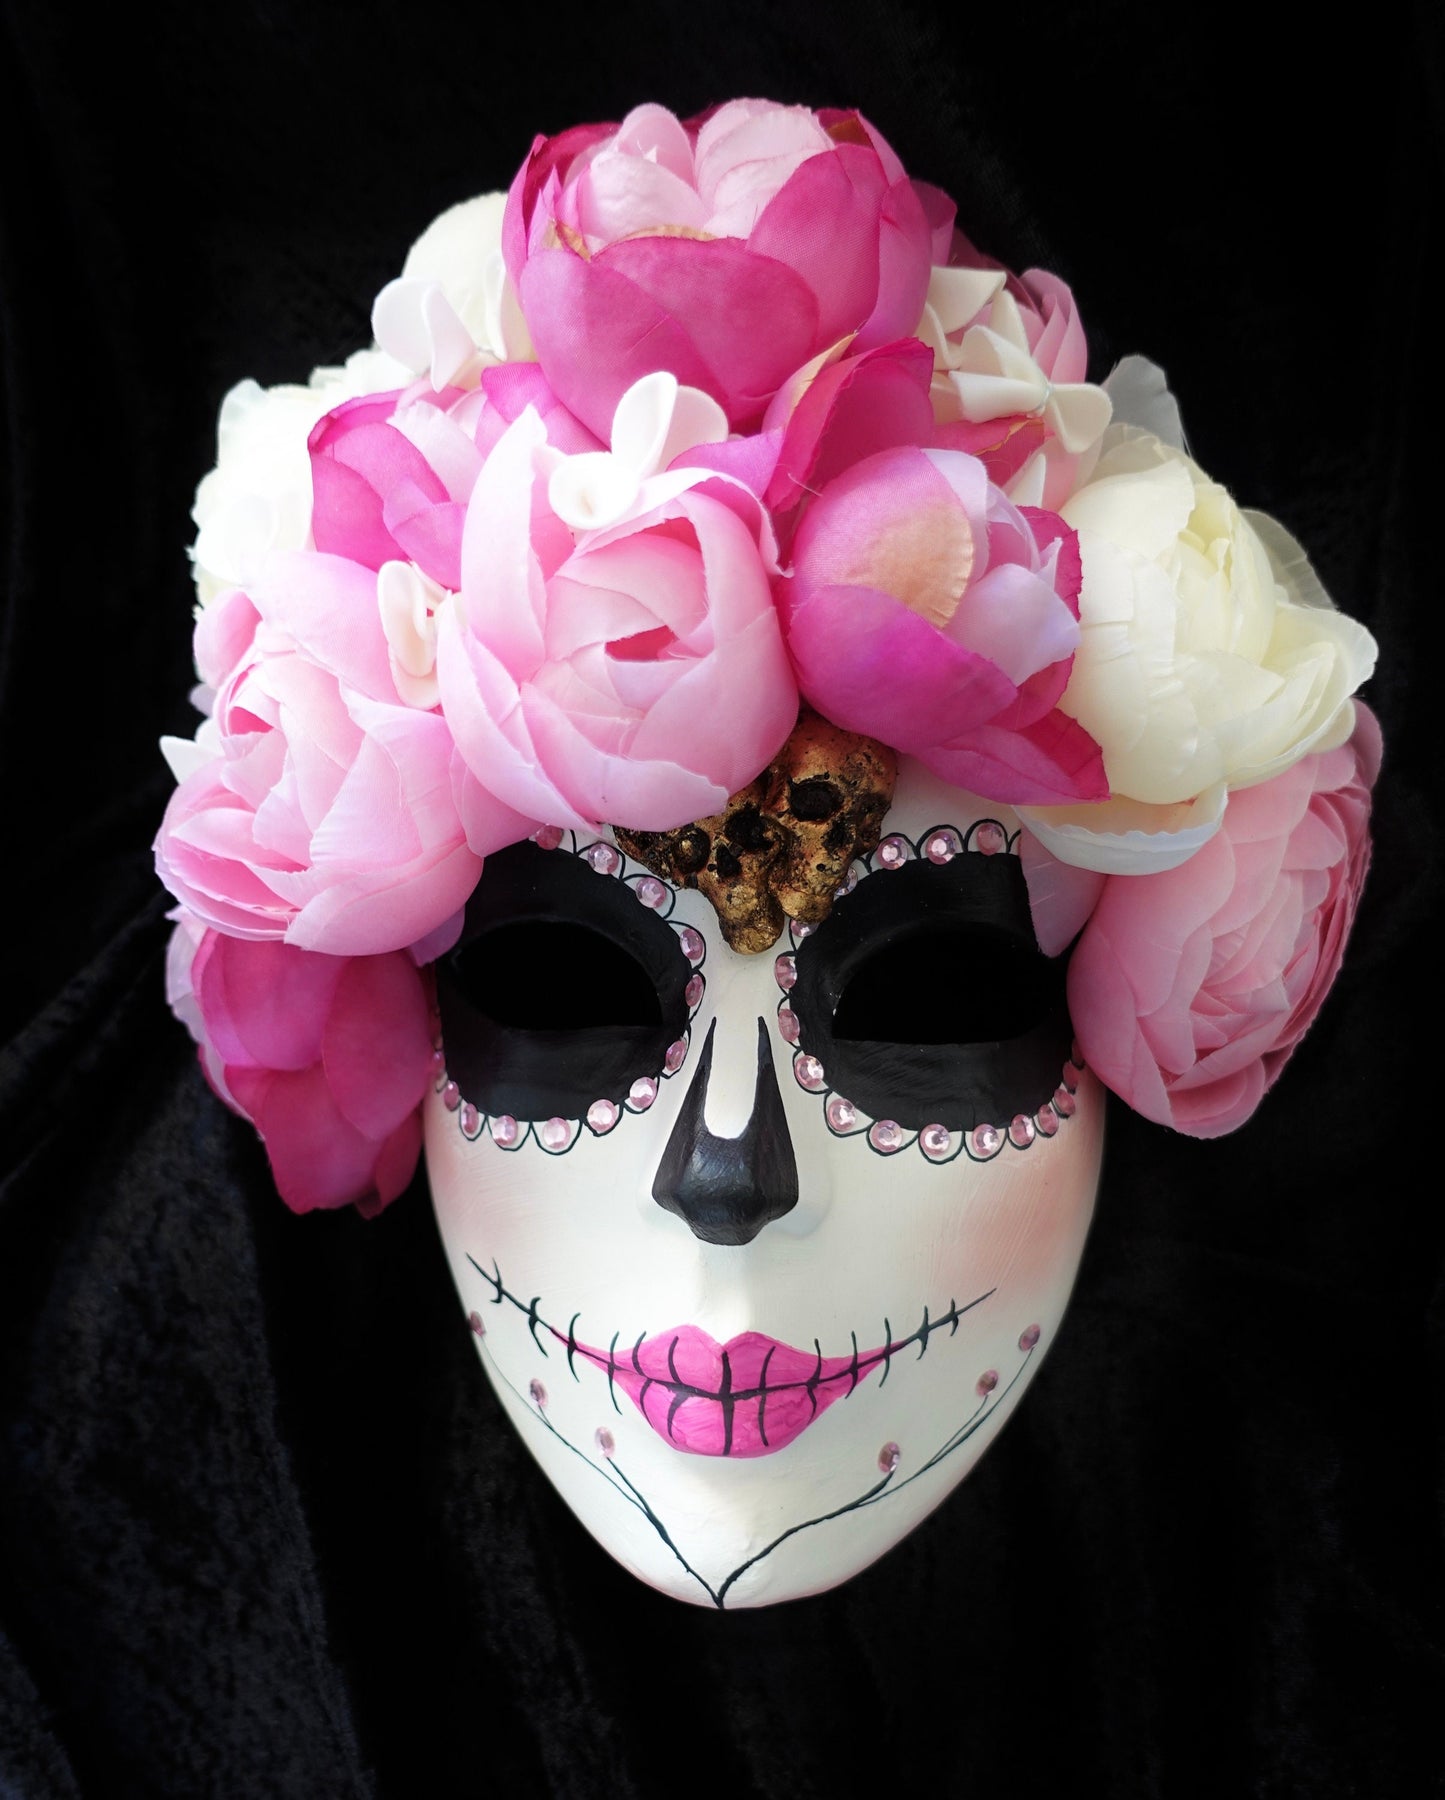 Máscara de Caterina de México día de la muerte modelo original Calavera Mexicana